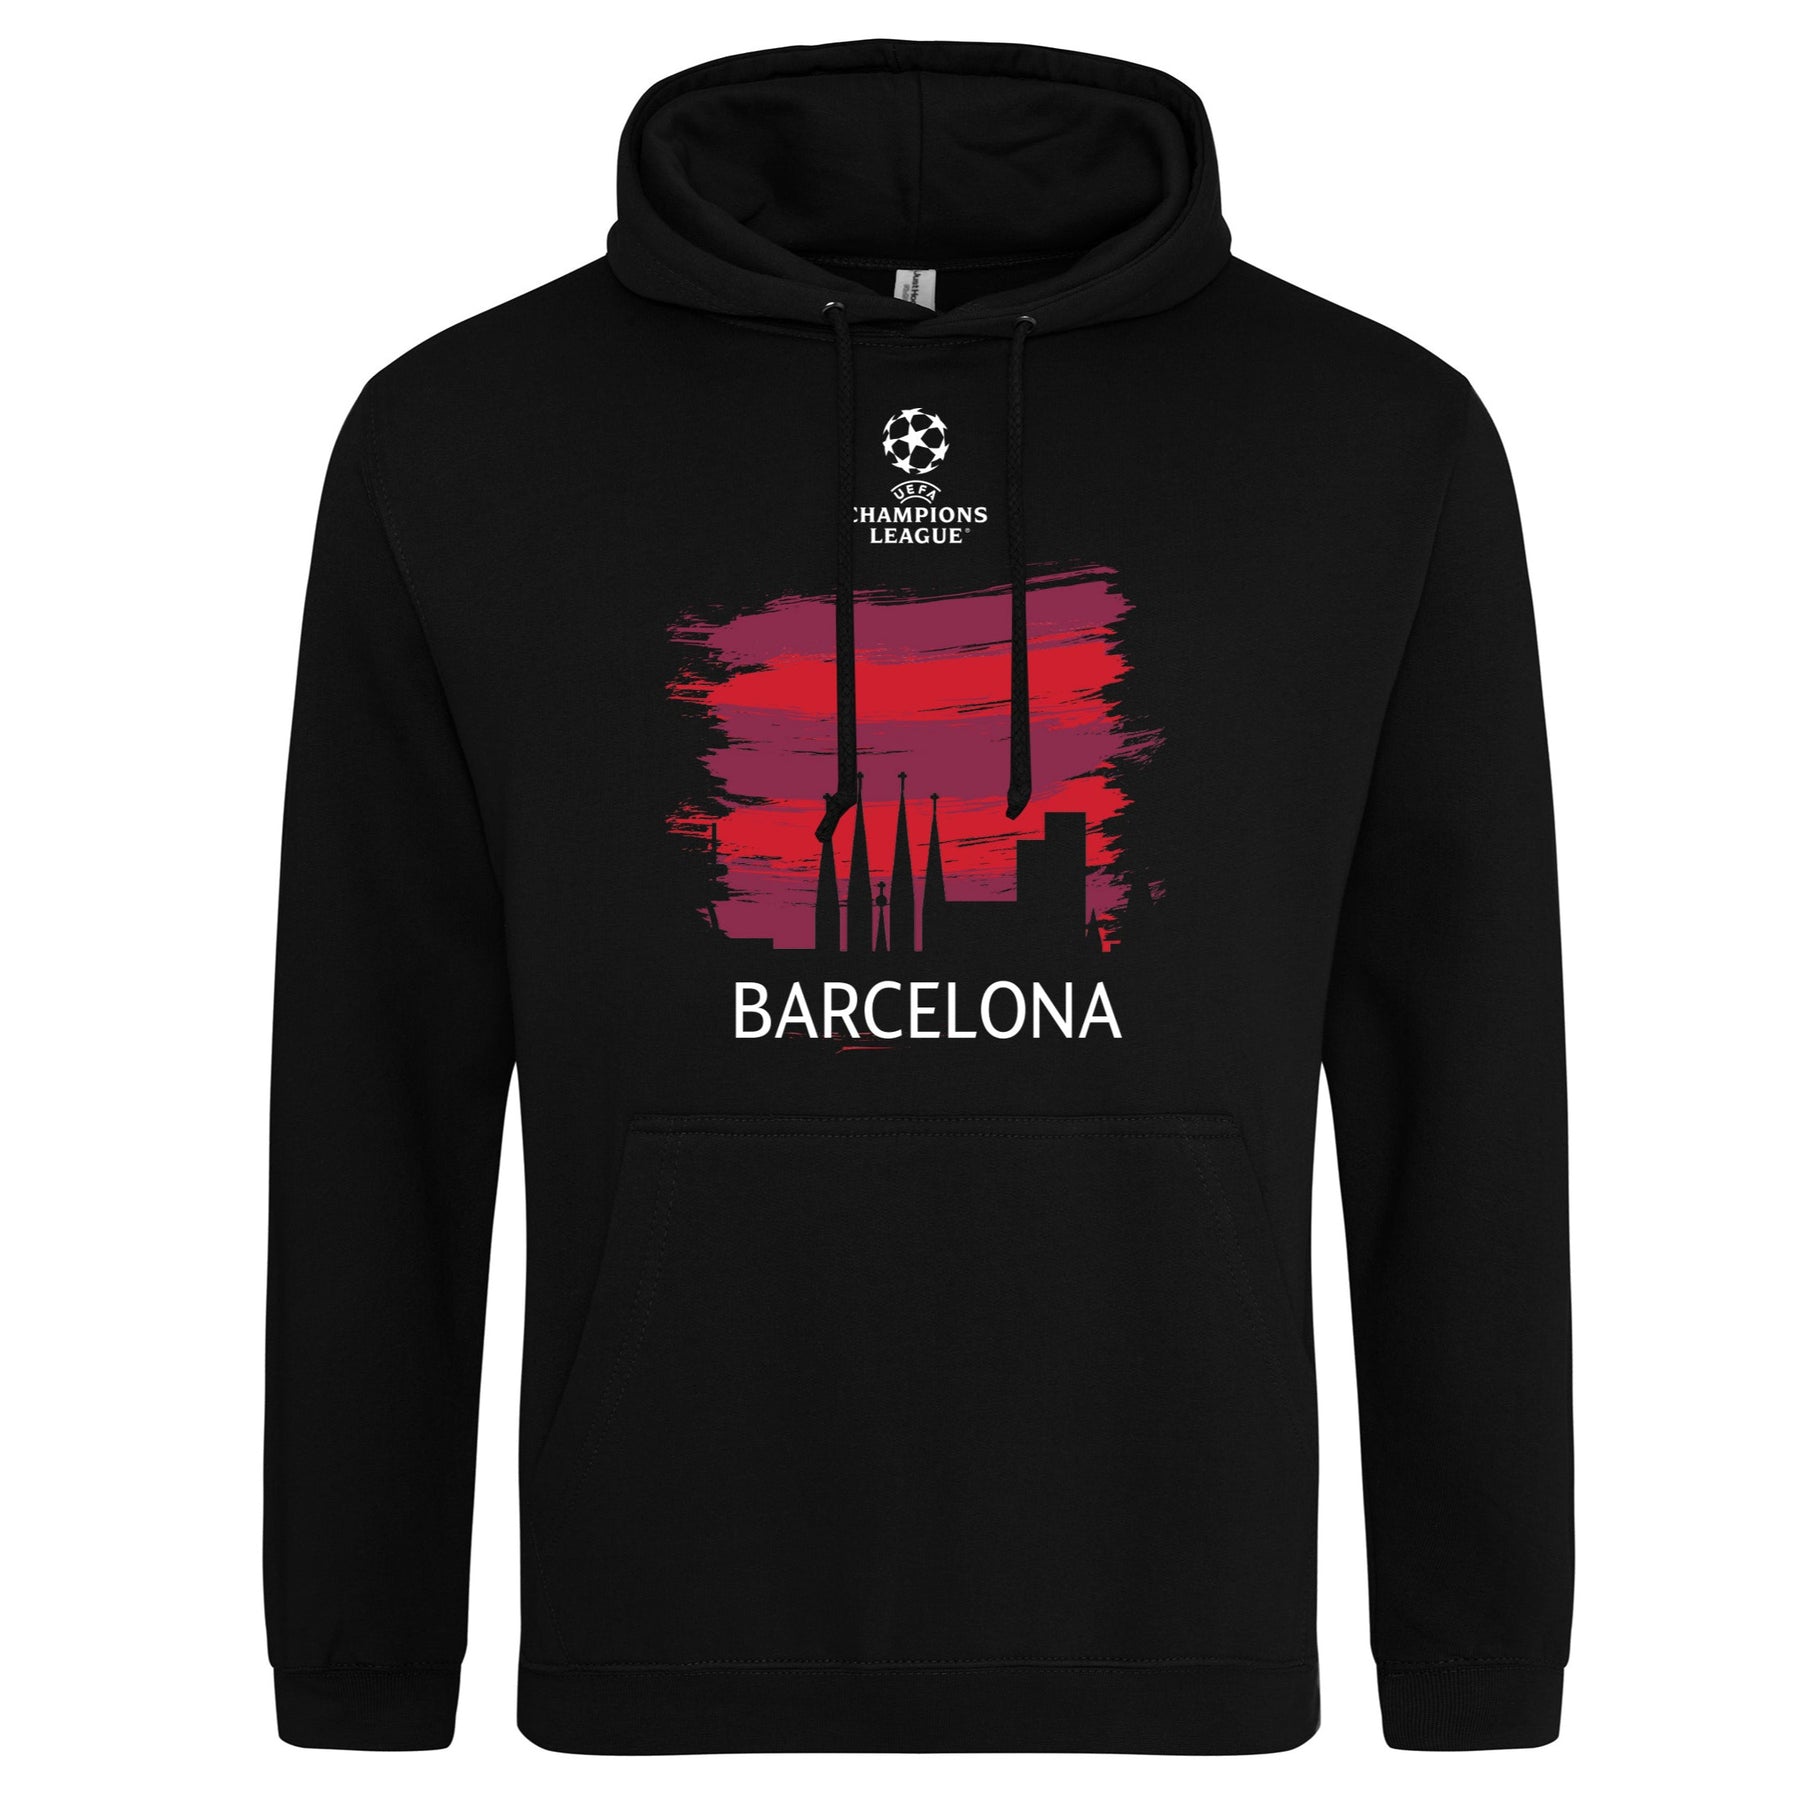 Champions League Barcelona City Painted Skyline Hoodie Black